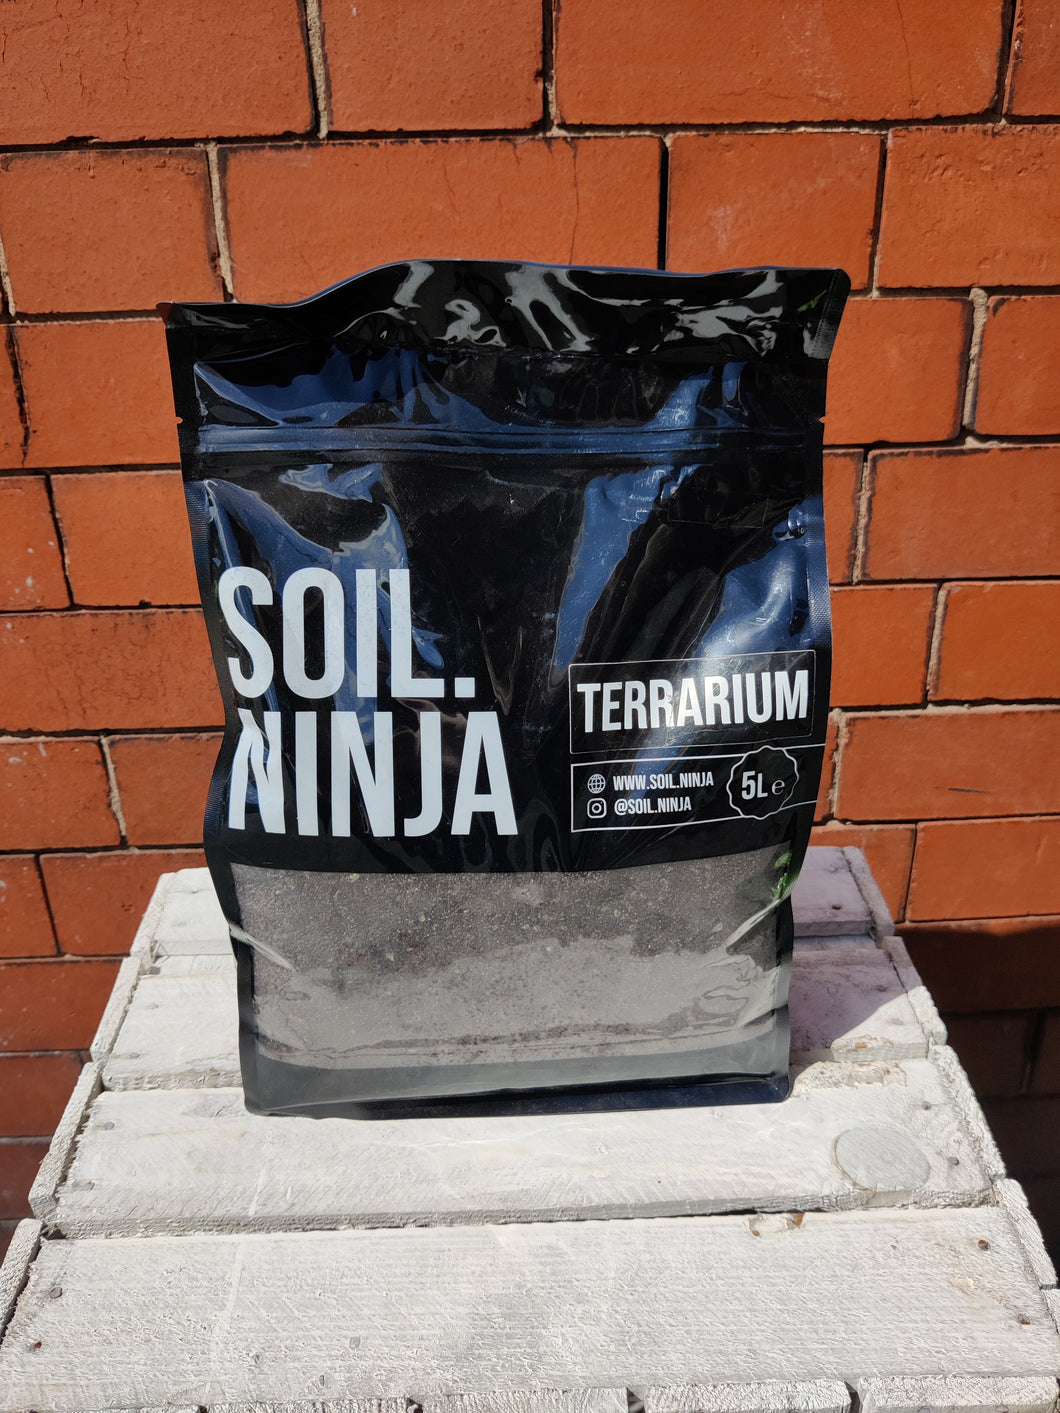 Terrarium 5L Soil. Ninja